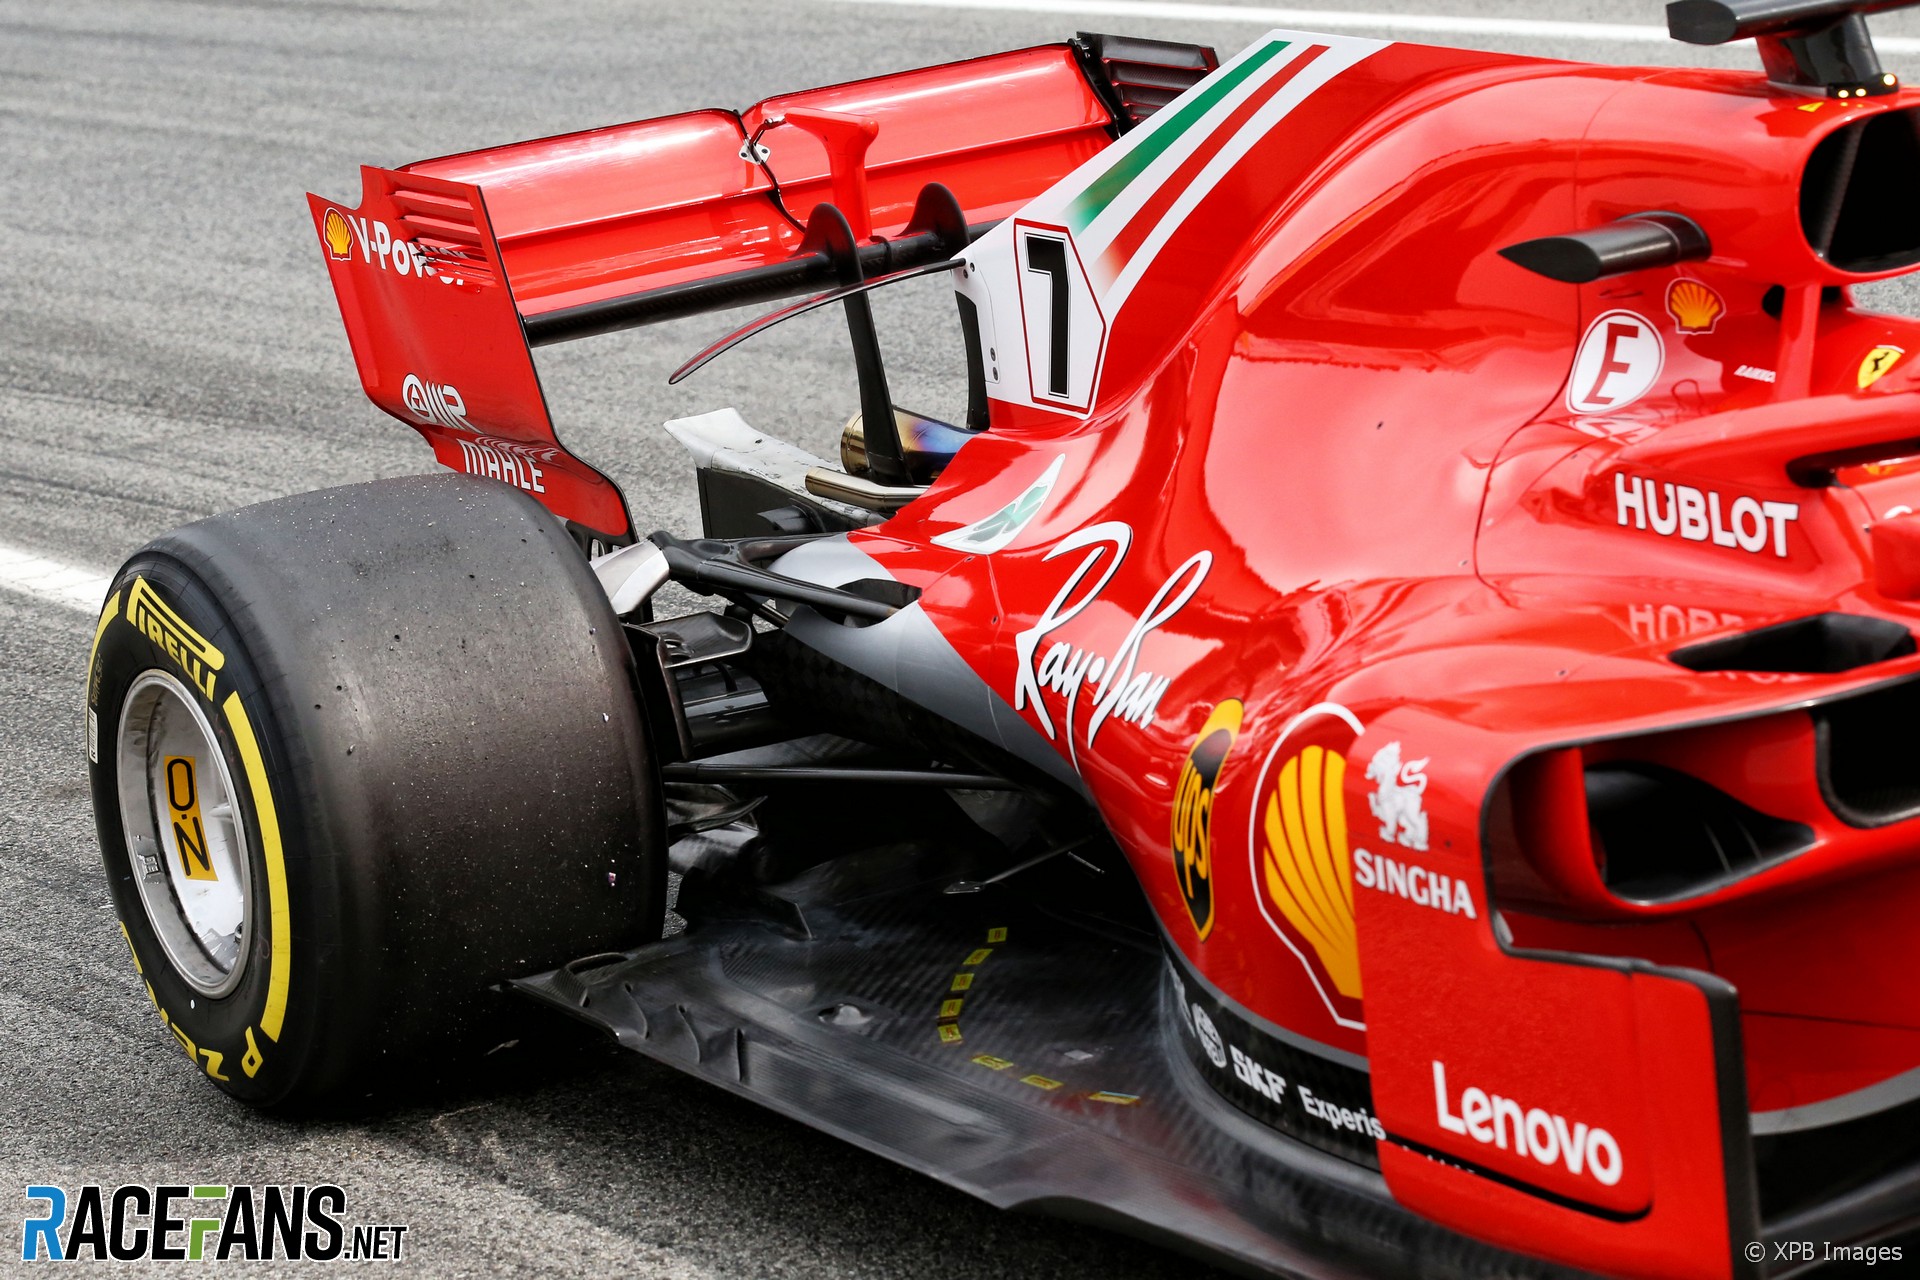 Ferrari SF71H rear suspension, Circuit de Catalunya, 2018